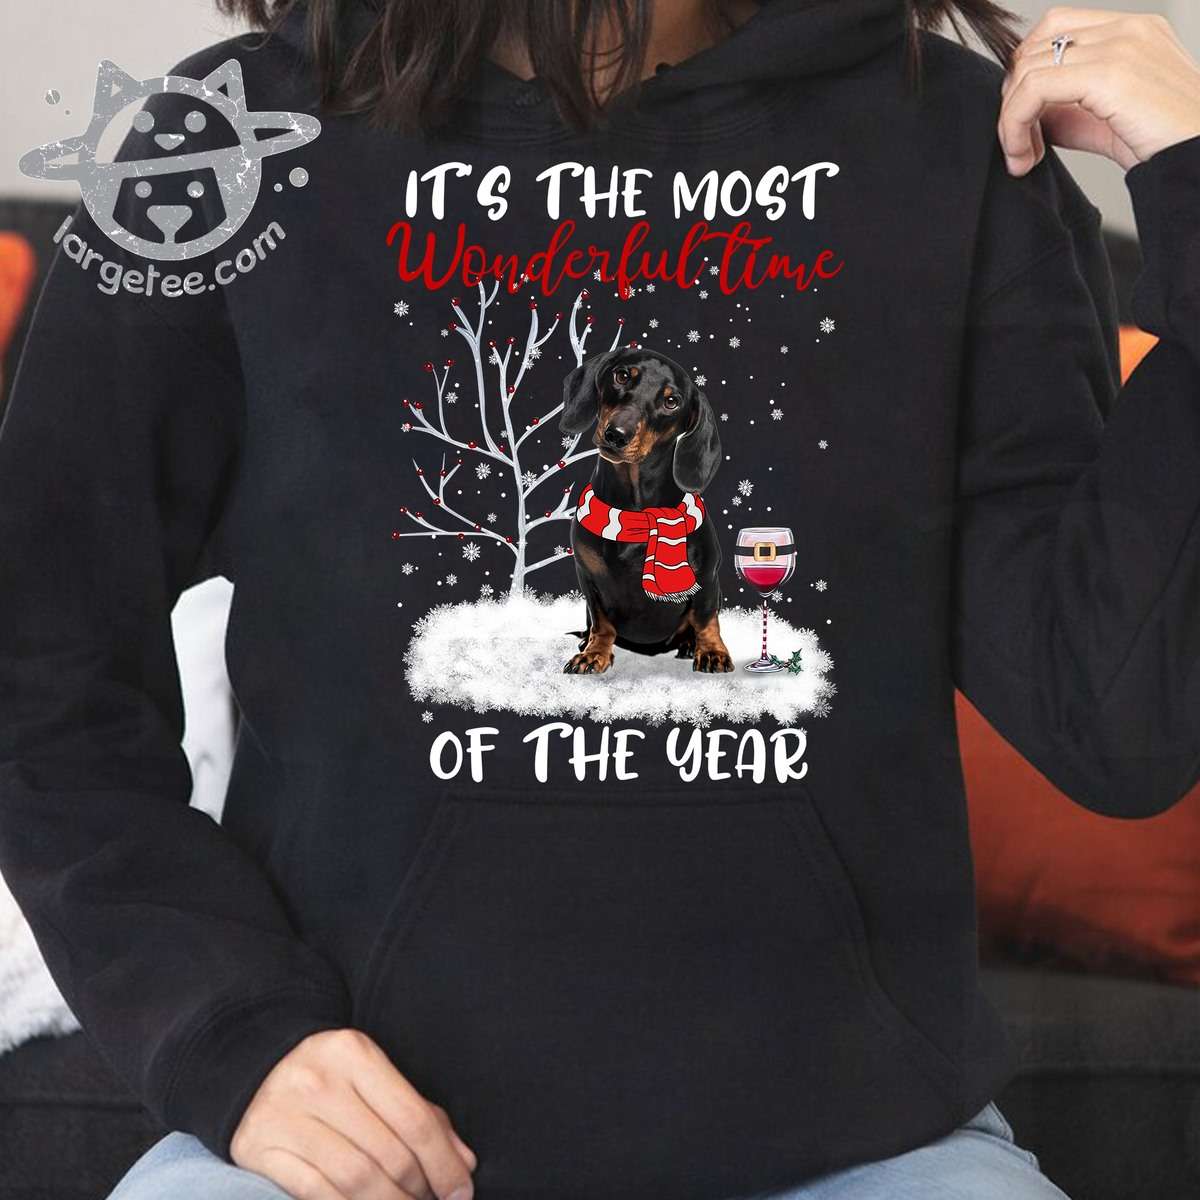 It's officially Christmas sweater season #goldenretrieverlife #dog